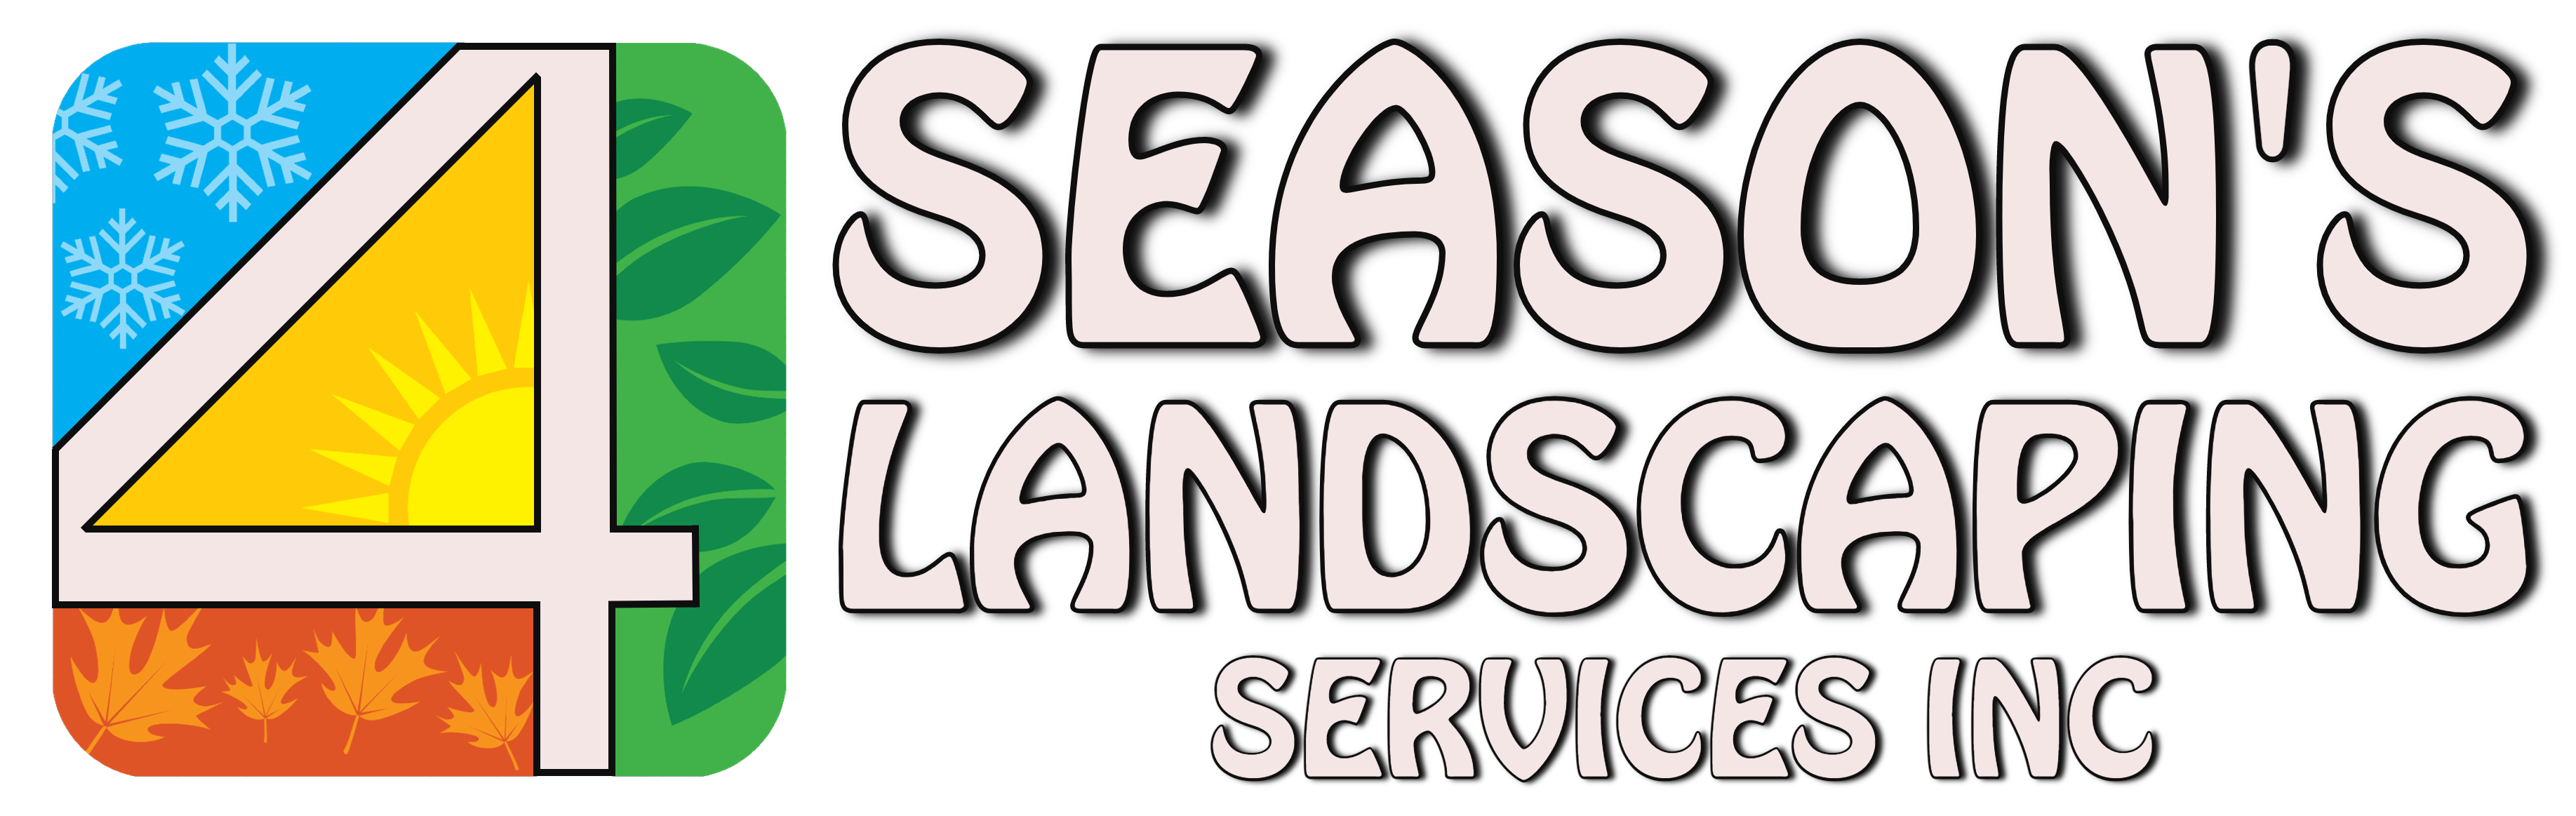 4Season’s Landscaping